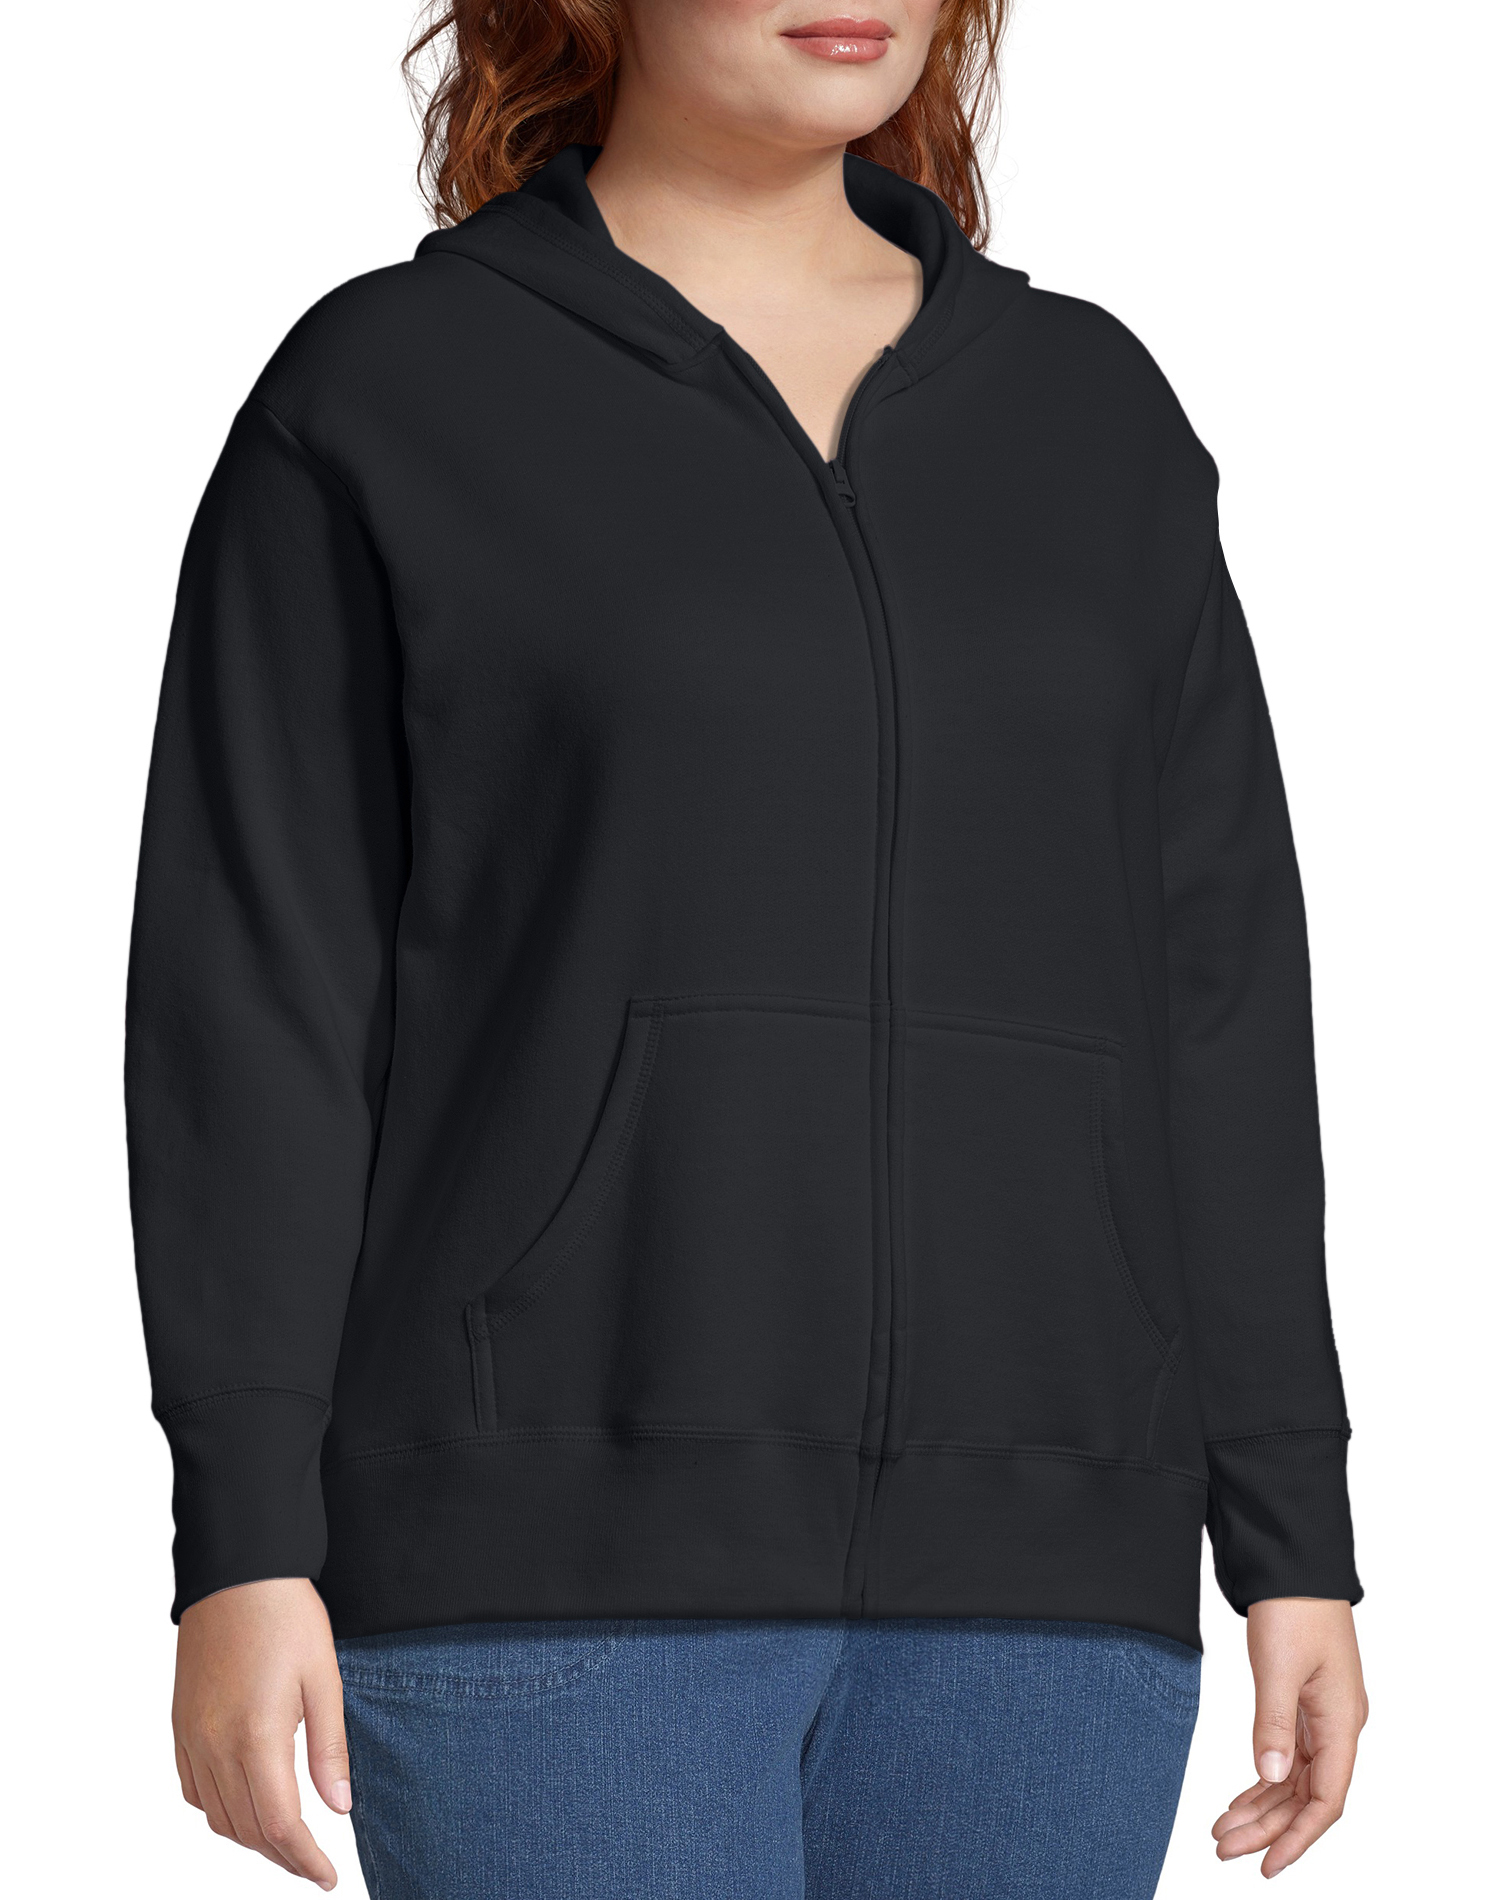 JMS by Hanes Women's Plus Size Fleece Zip Hood Jacket - image 3 of 6